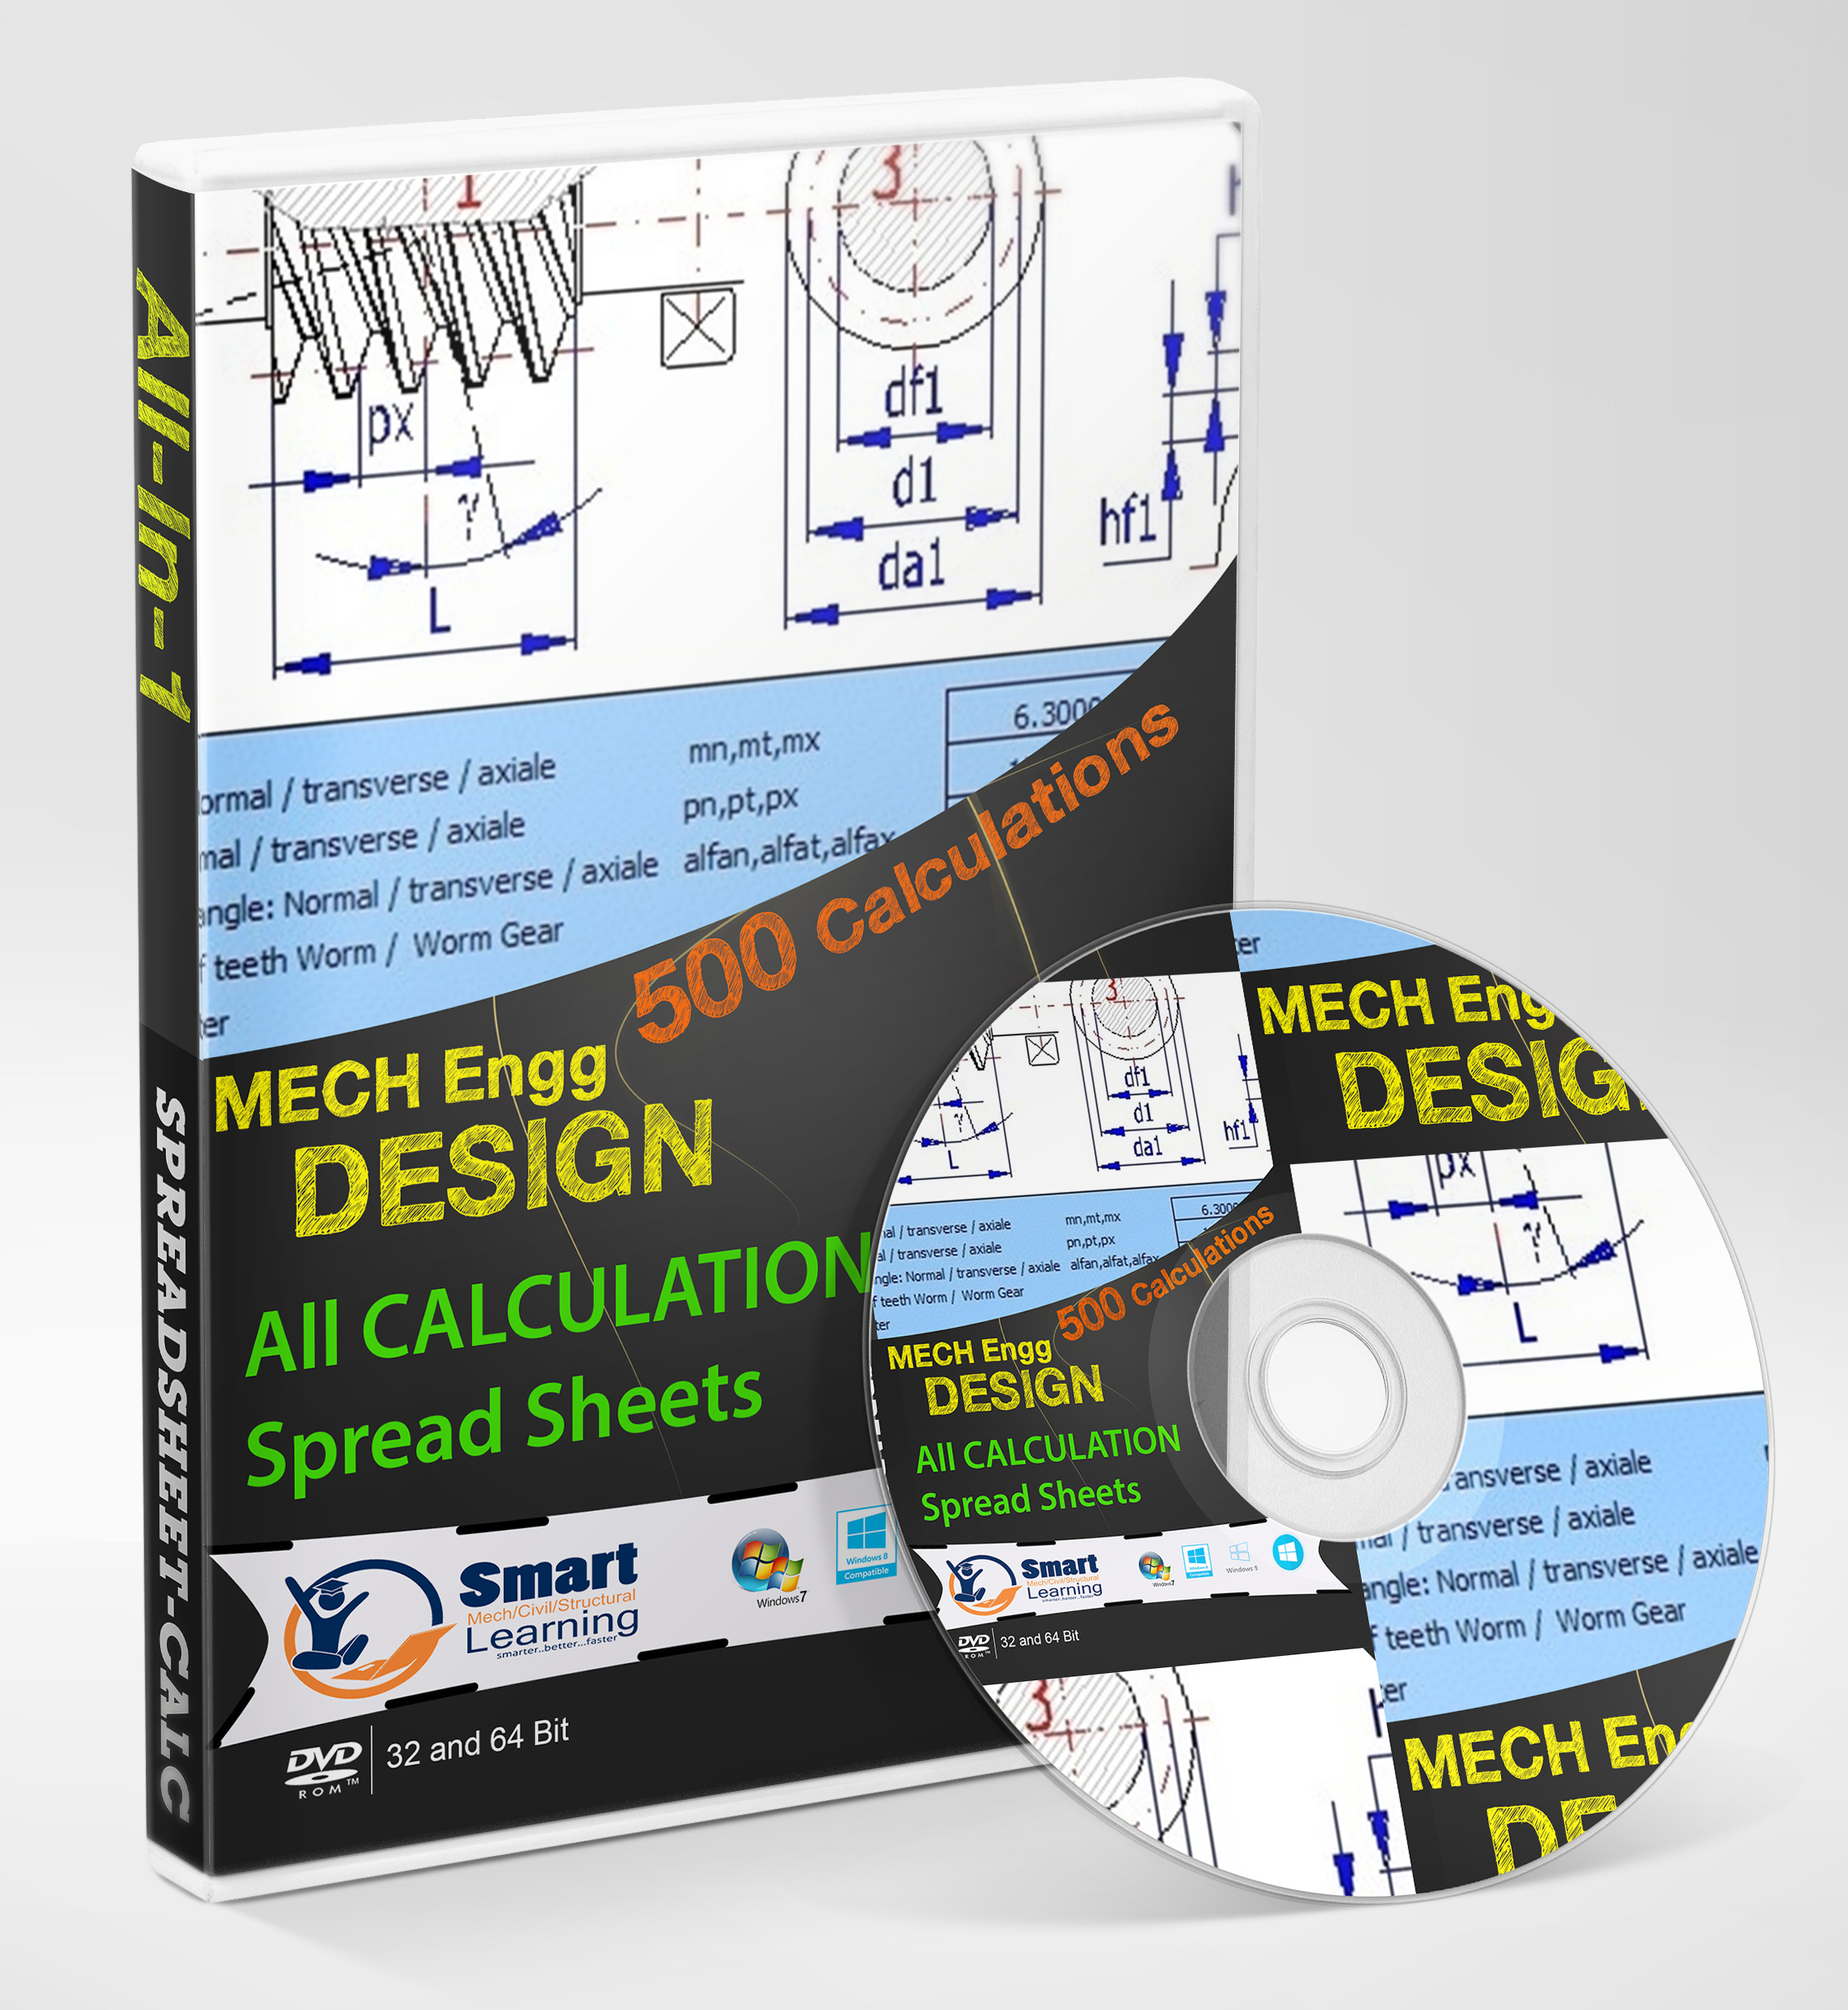 Mechanical Engineering Design Spreadsheet Toolkit Free Download Regarding Mechanical Engineering Design Spreadsheet Toolkit